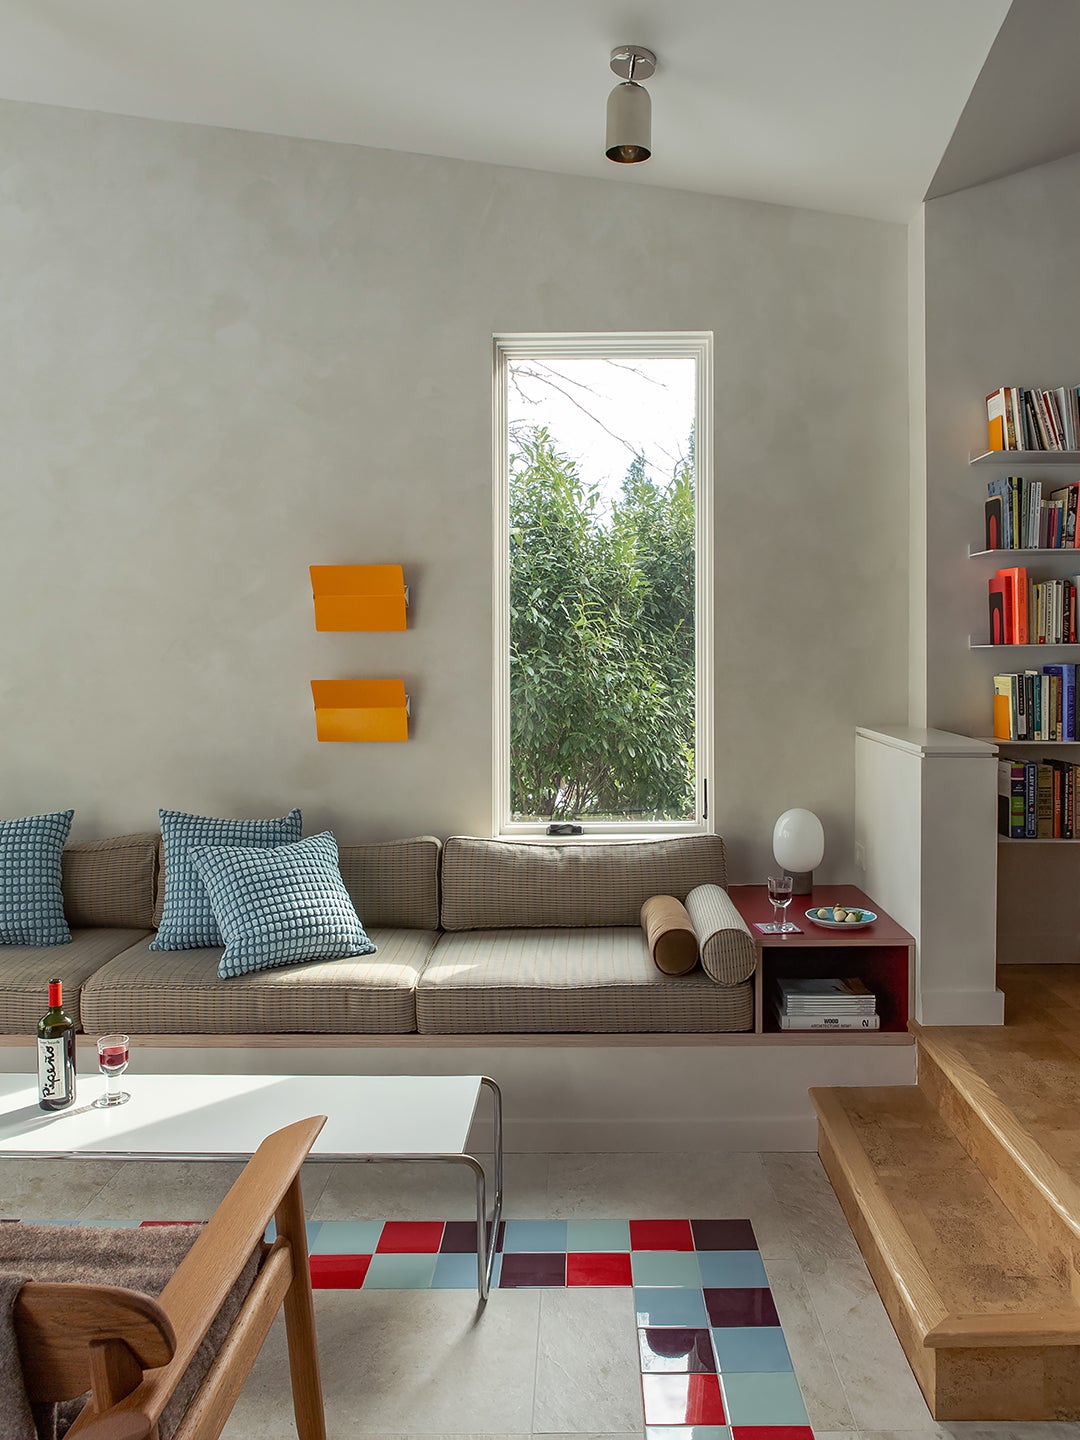 Living room with tile floor and slim vertical window